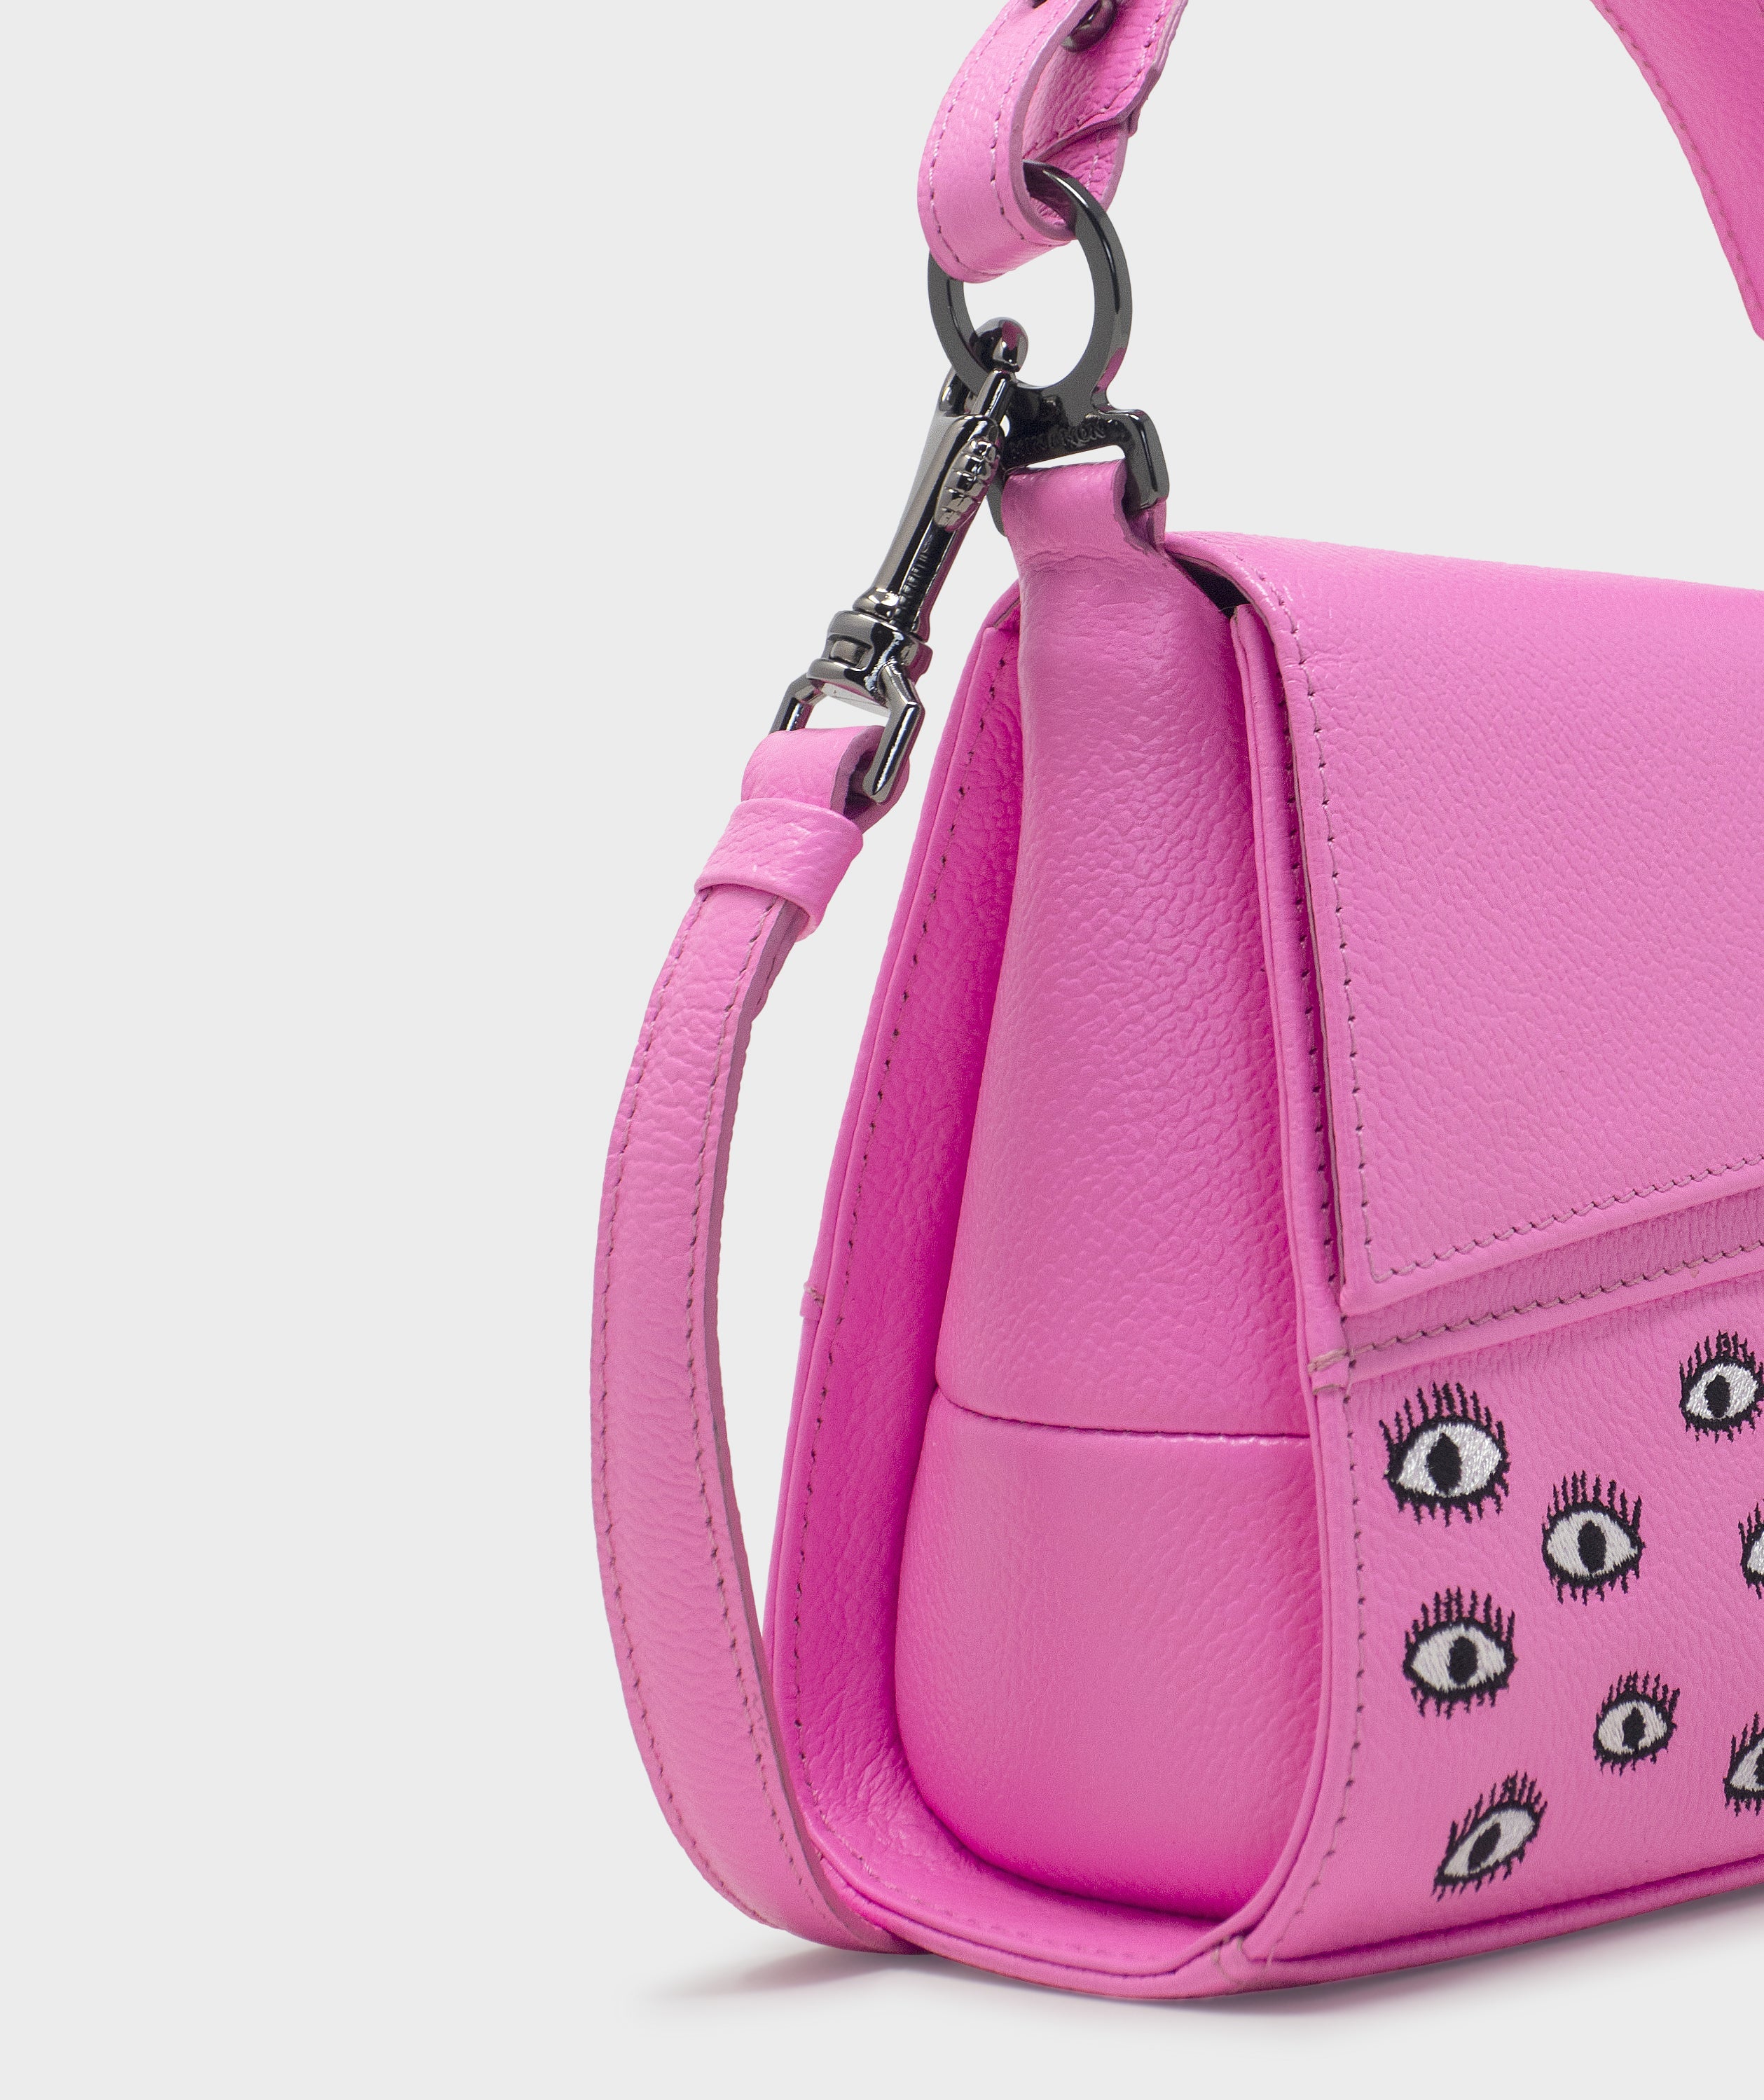 Anastasio Micro Crossbody Handbag Bubblegum Pink Leather - Eyes Embroidery - Detail view